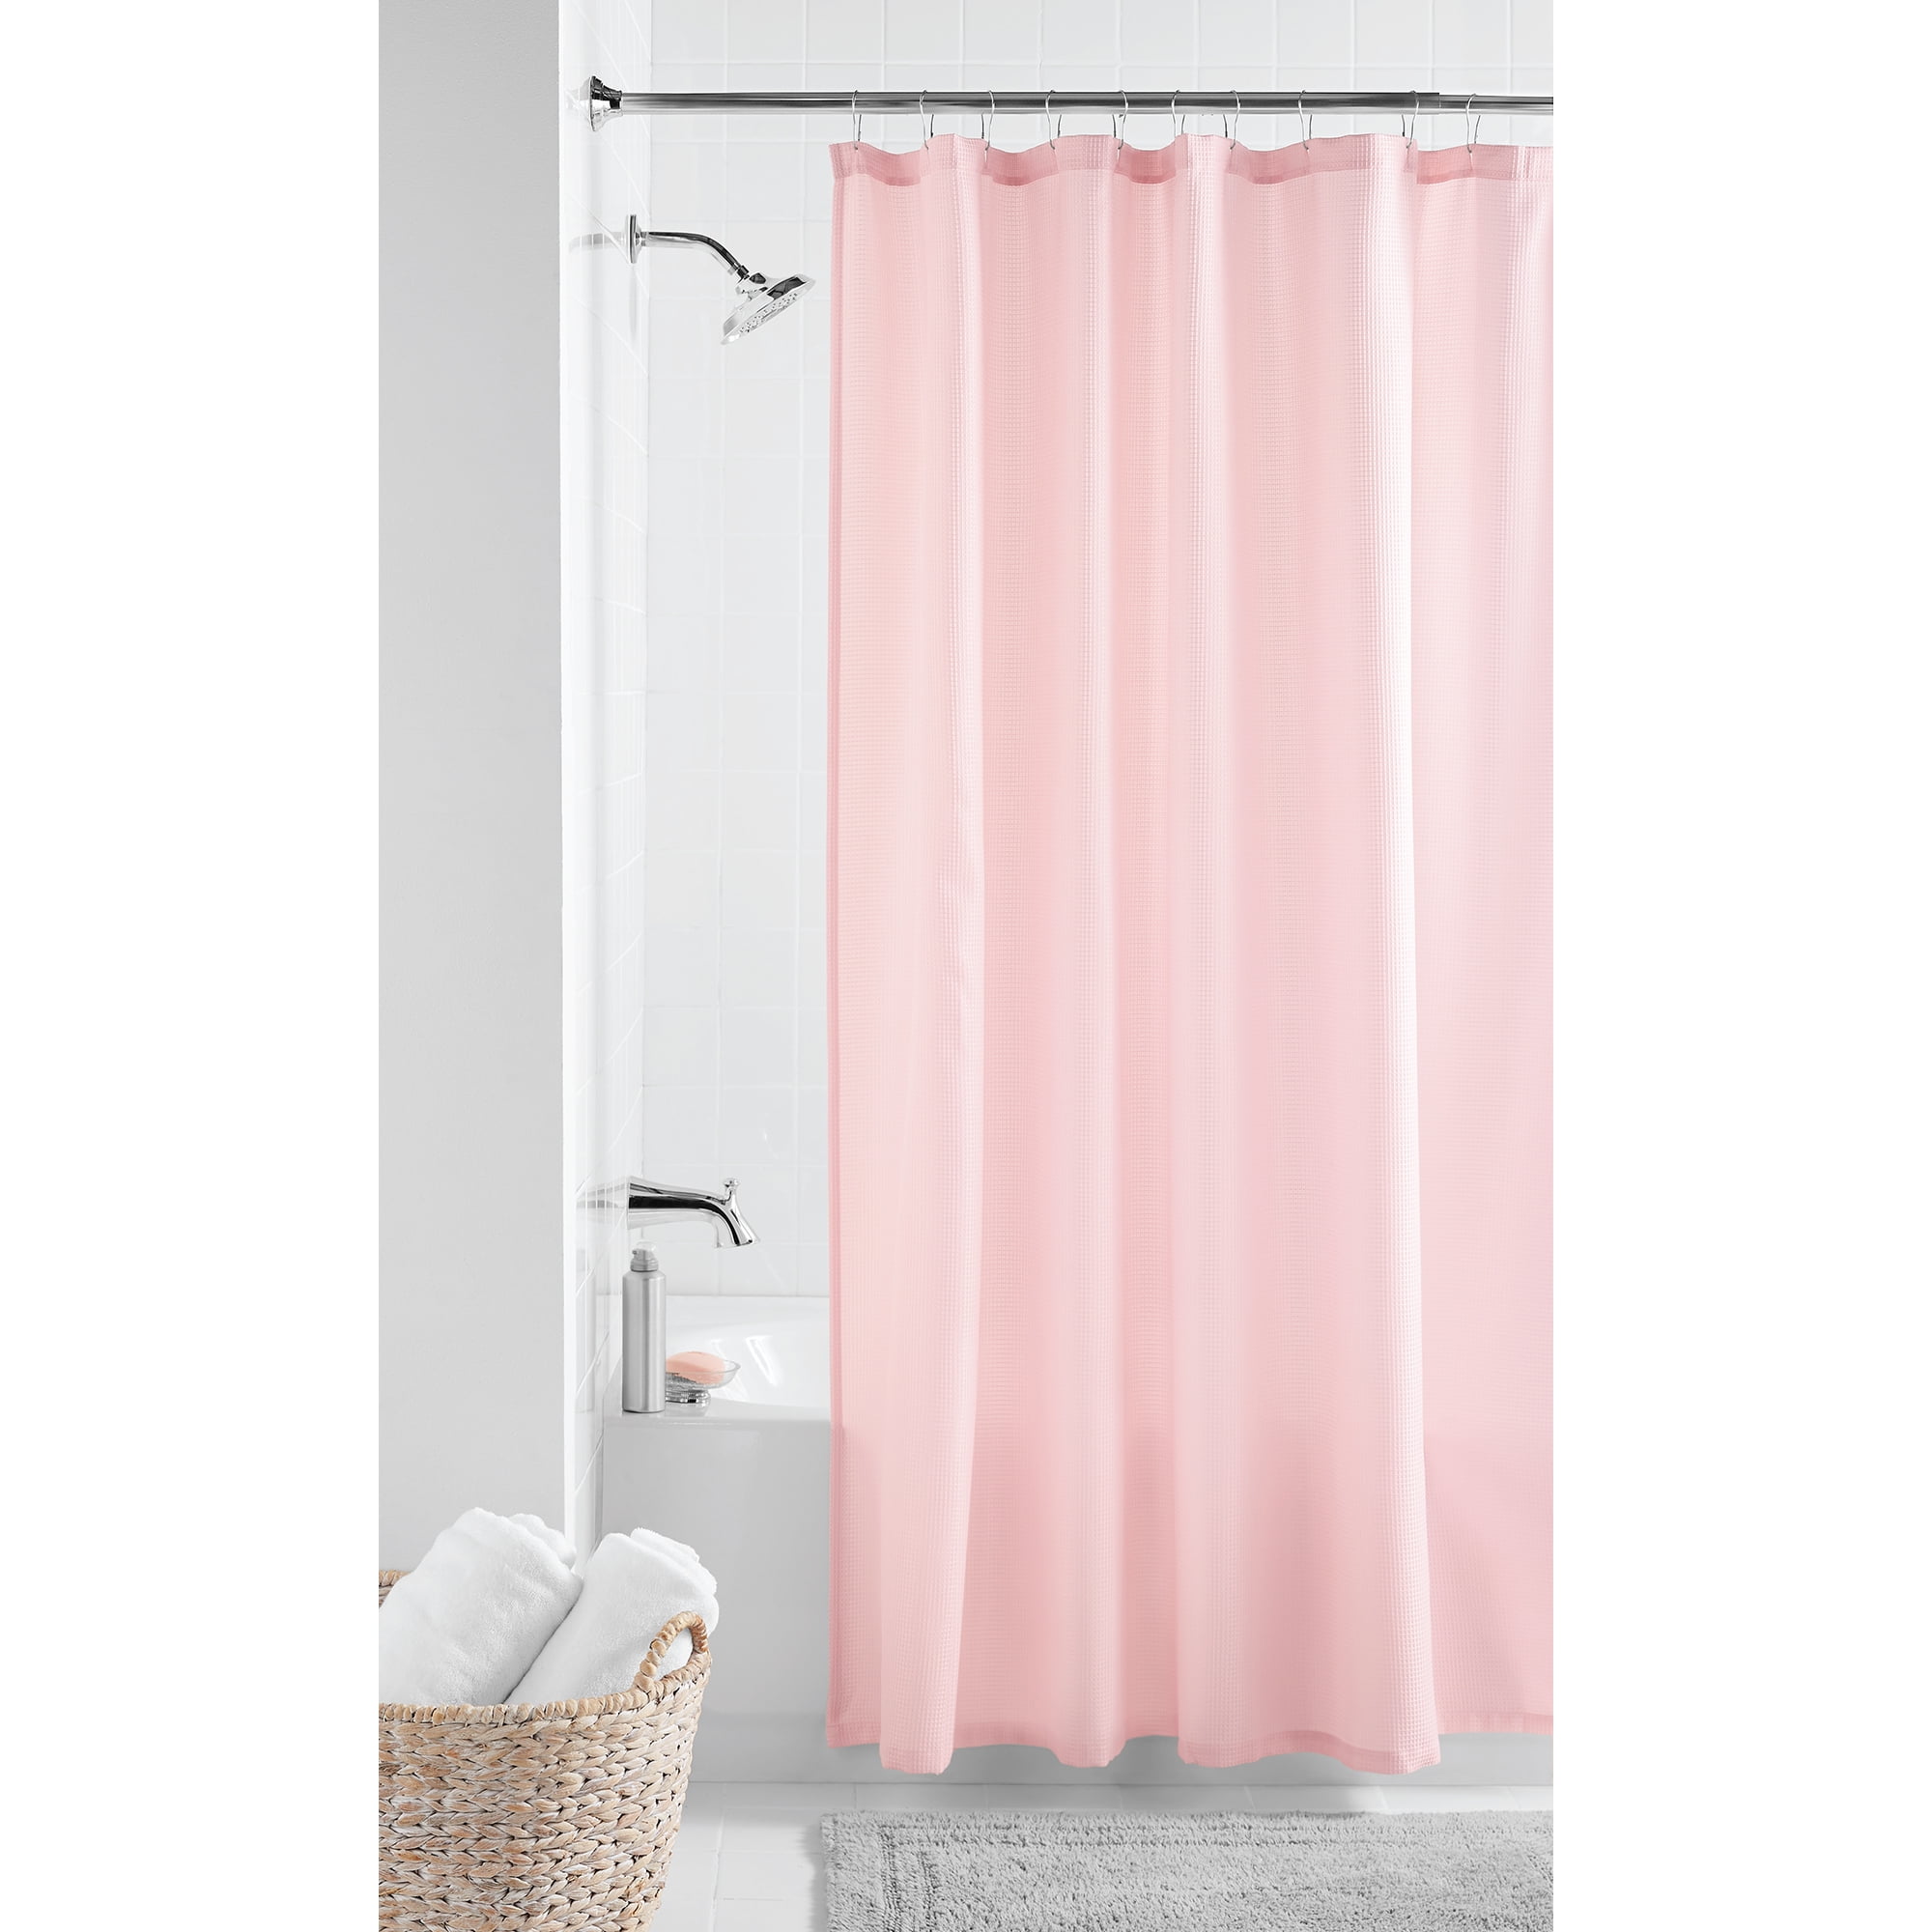 Super Mario Fabric Waterproof Shower Curtain With 12 Hooks Set Bathroom Decor 